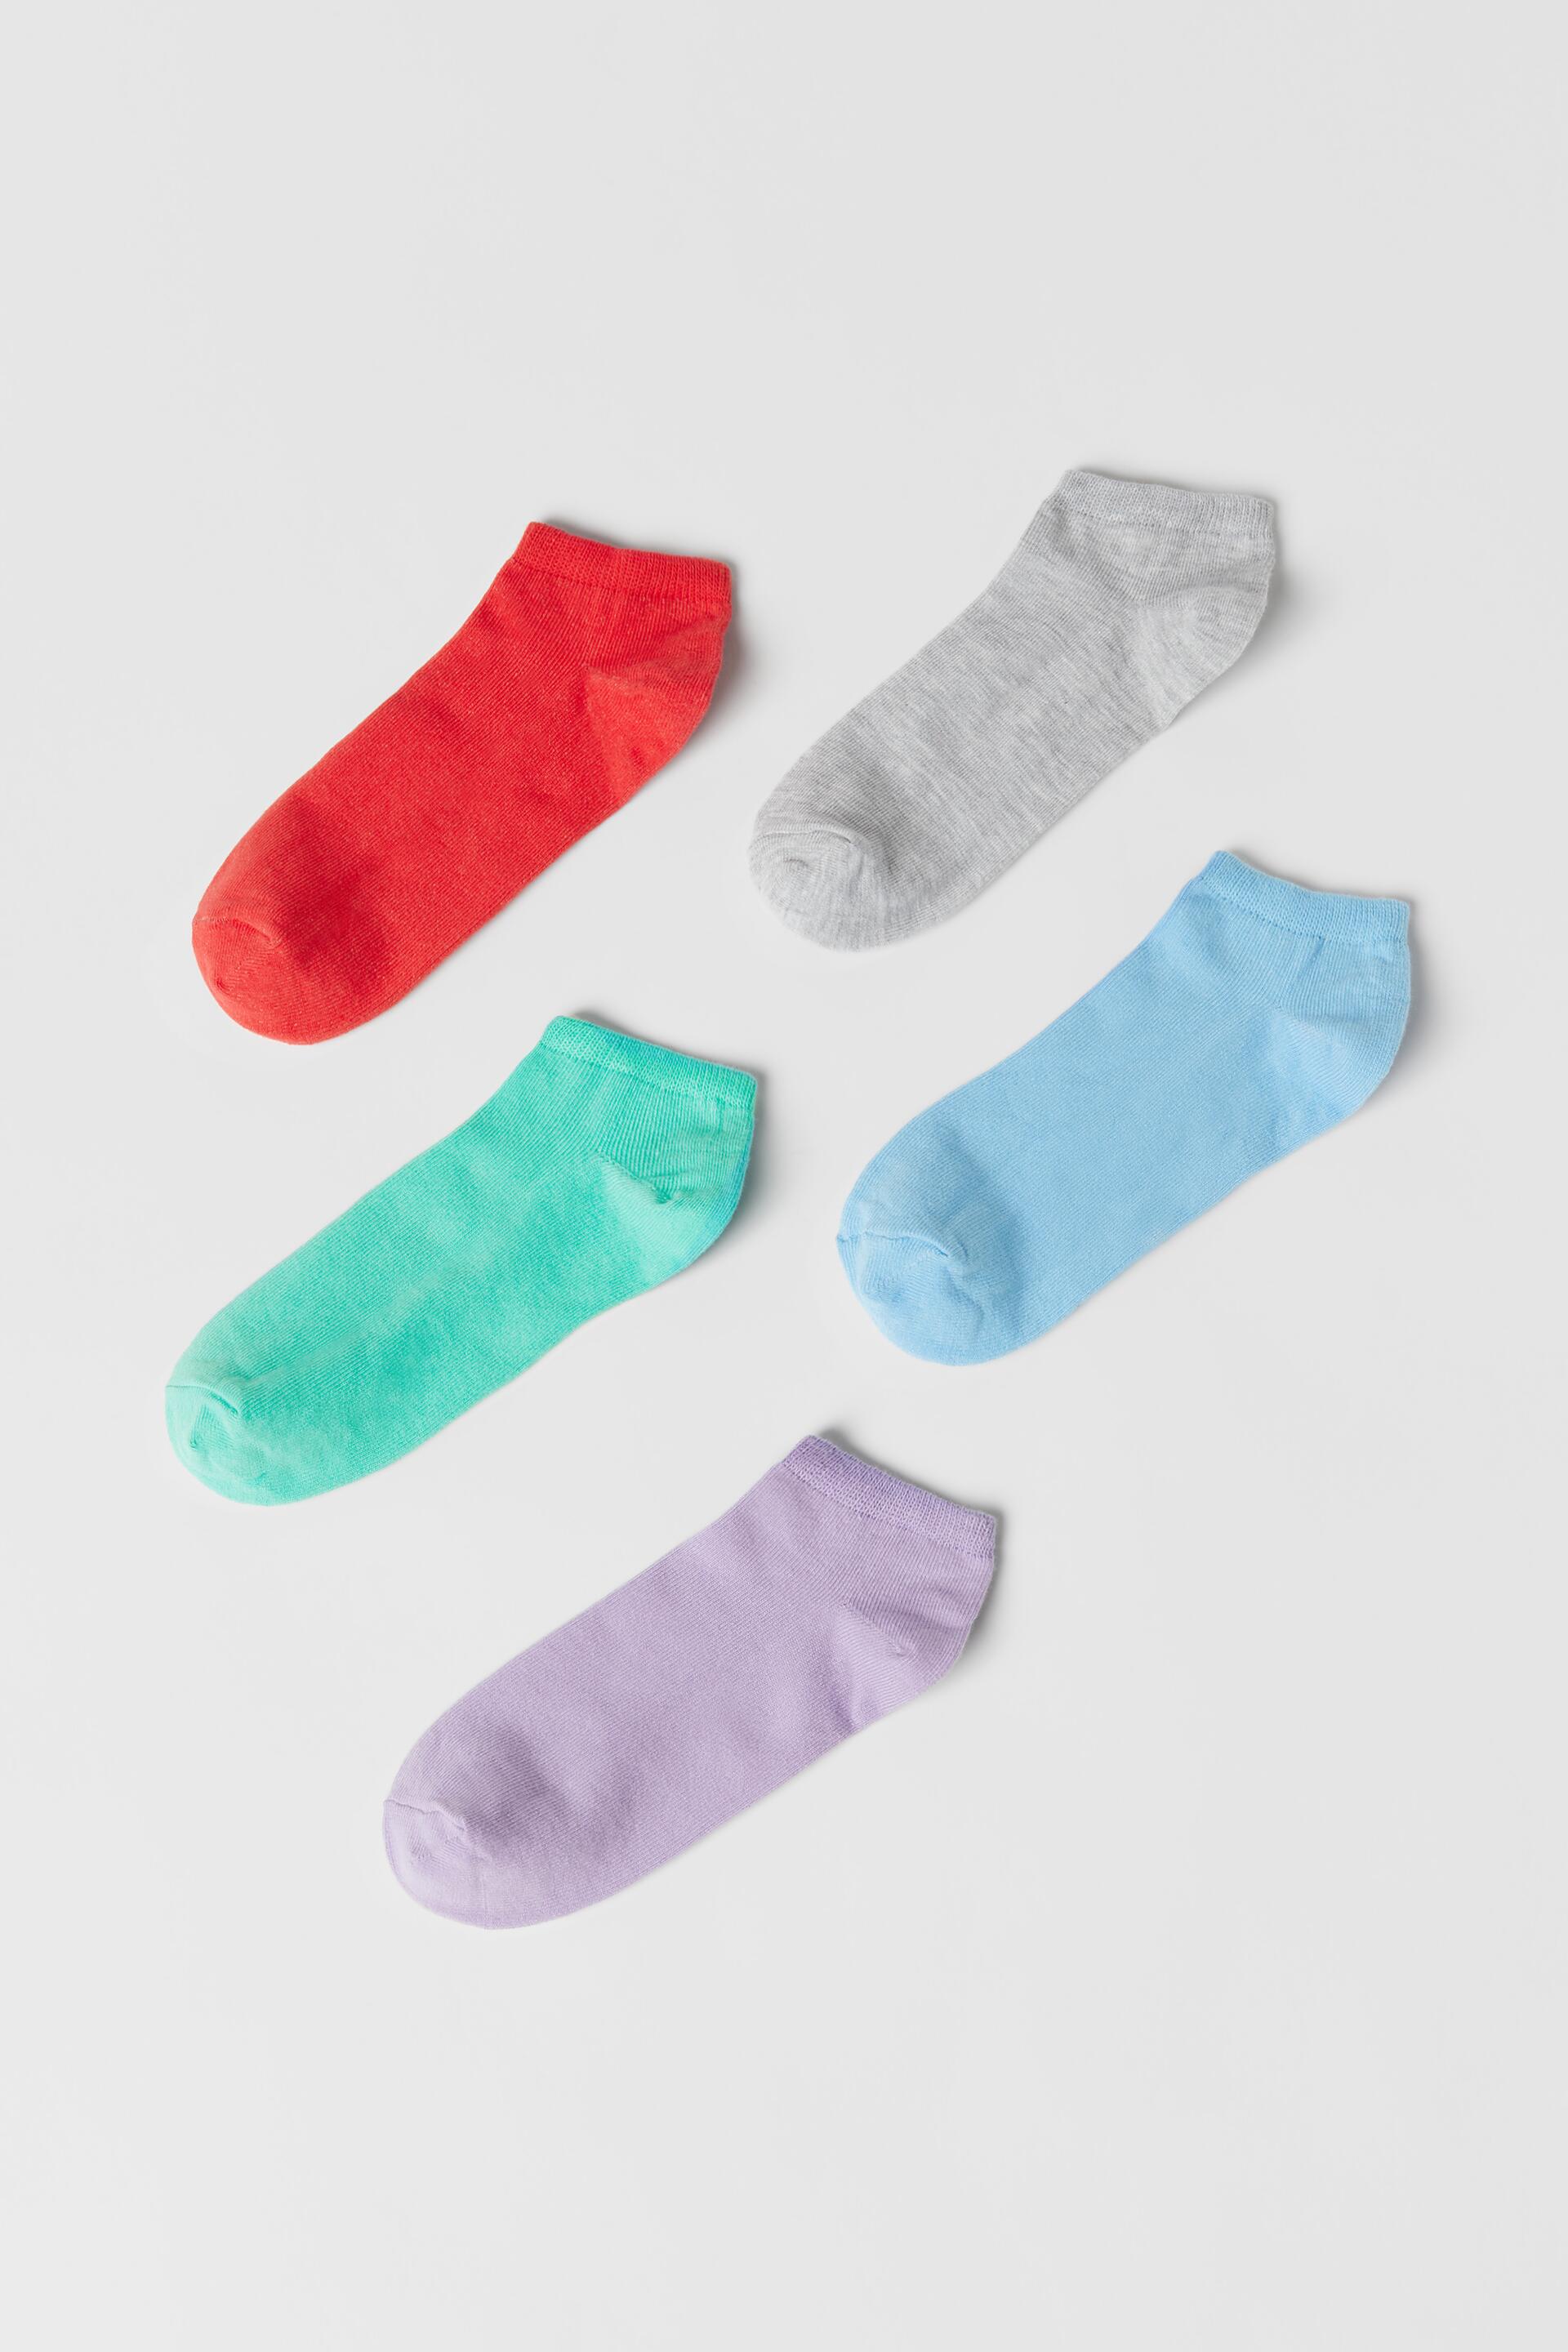 Zara Kids/ Five-Pack Of Colorful Plain Socks - Big Apple Buddy